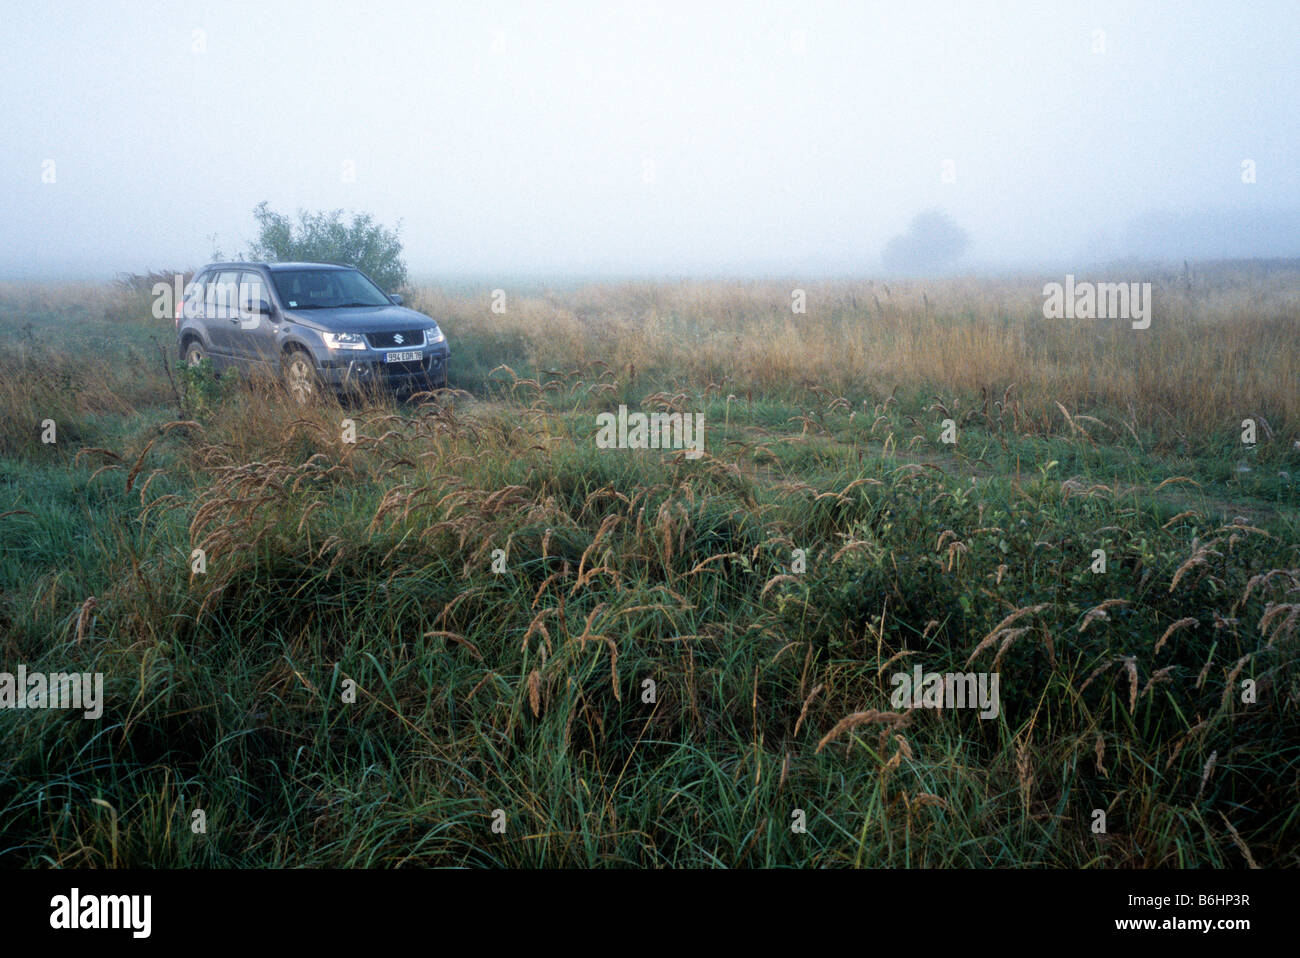 Poland village Suzuki Grand Vitara off road in morning fog mist Stock Photo  - Alamy